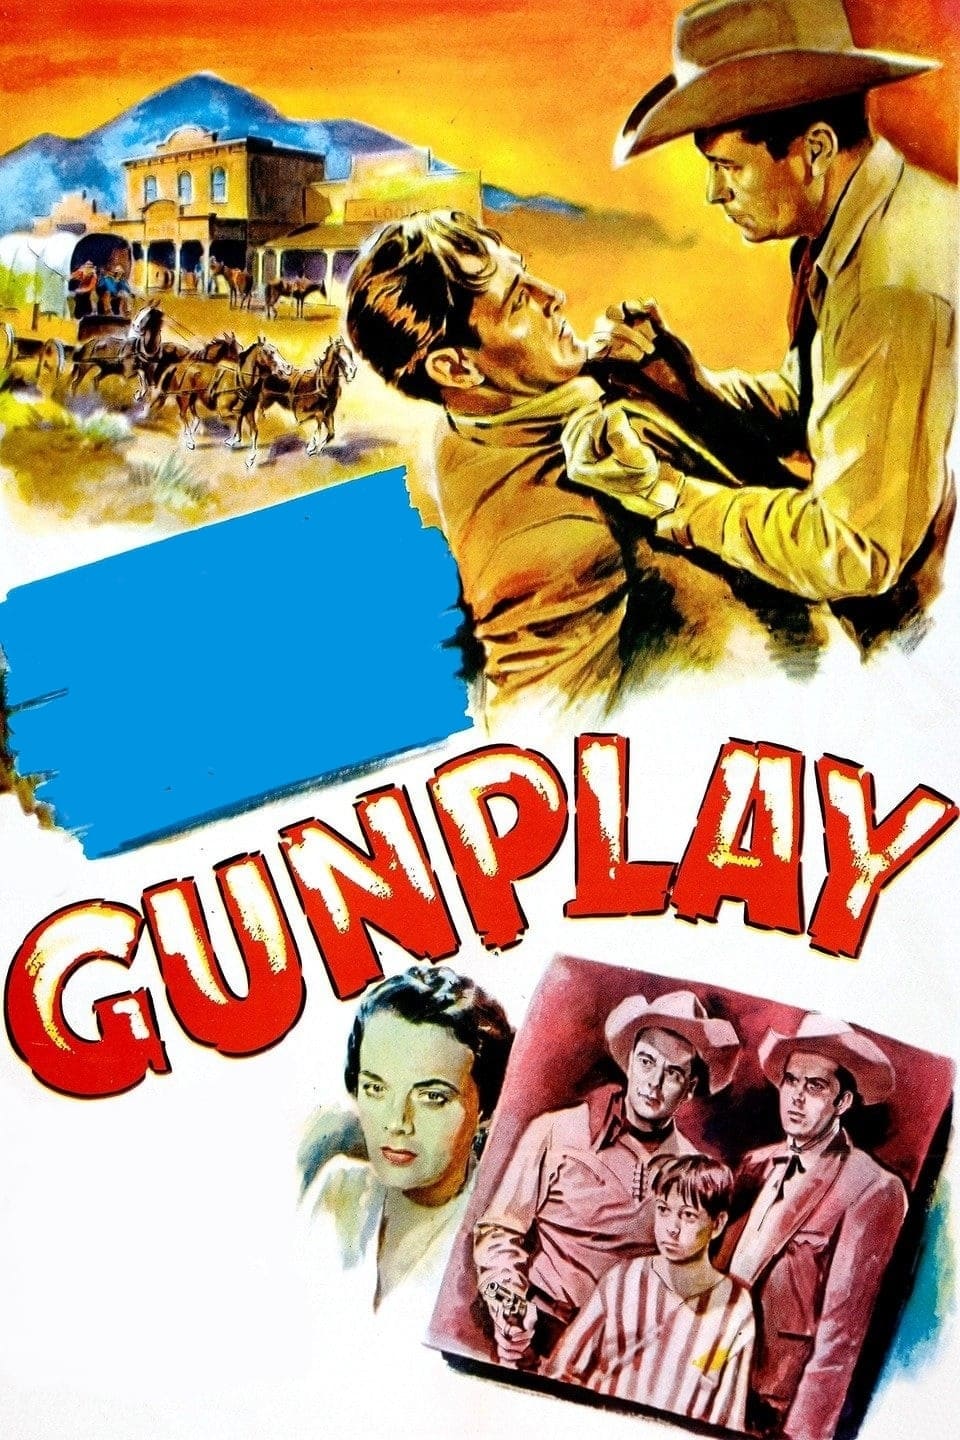 Gunplay